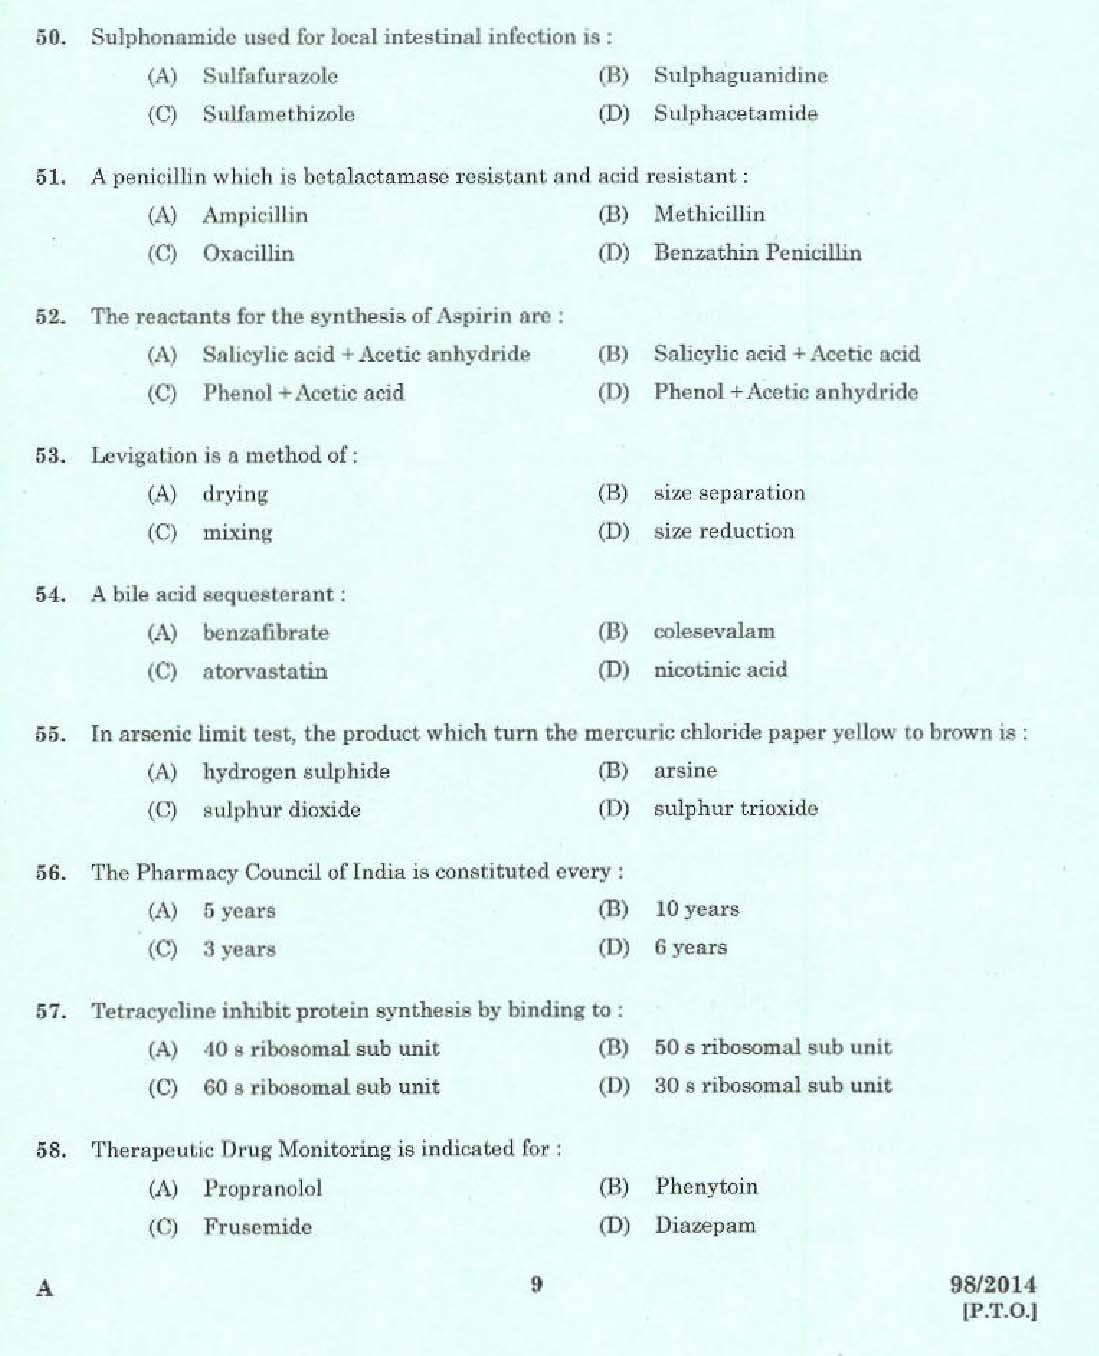 Kerala PSC Pharma Chemist Exam Code 982014 7